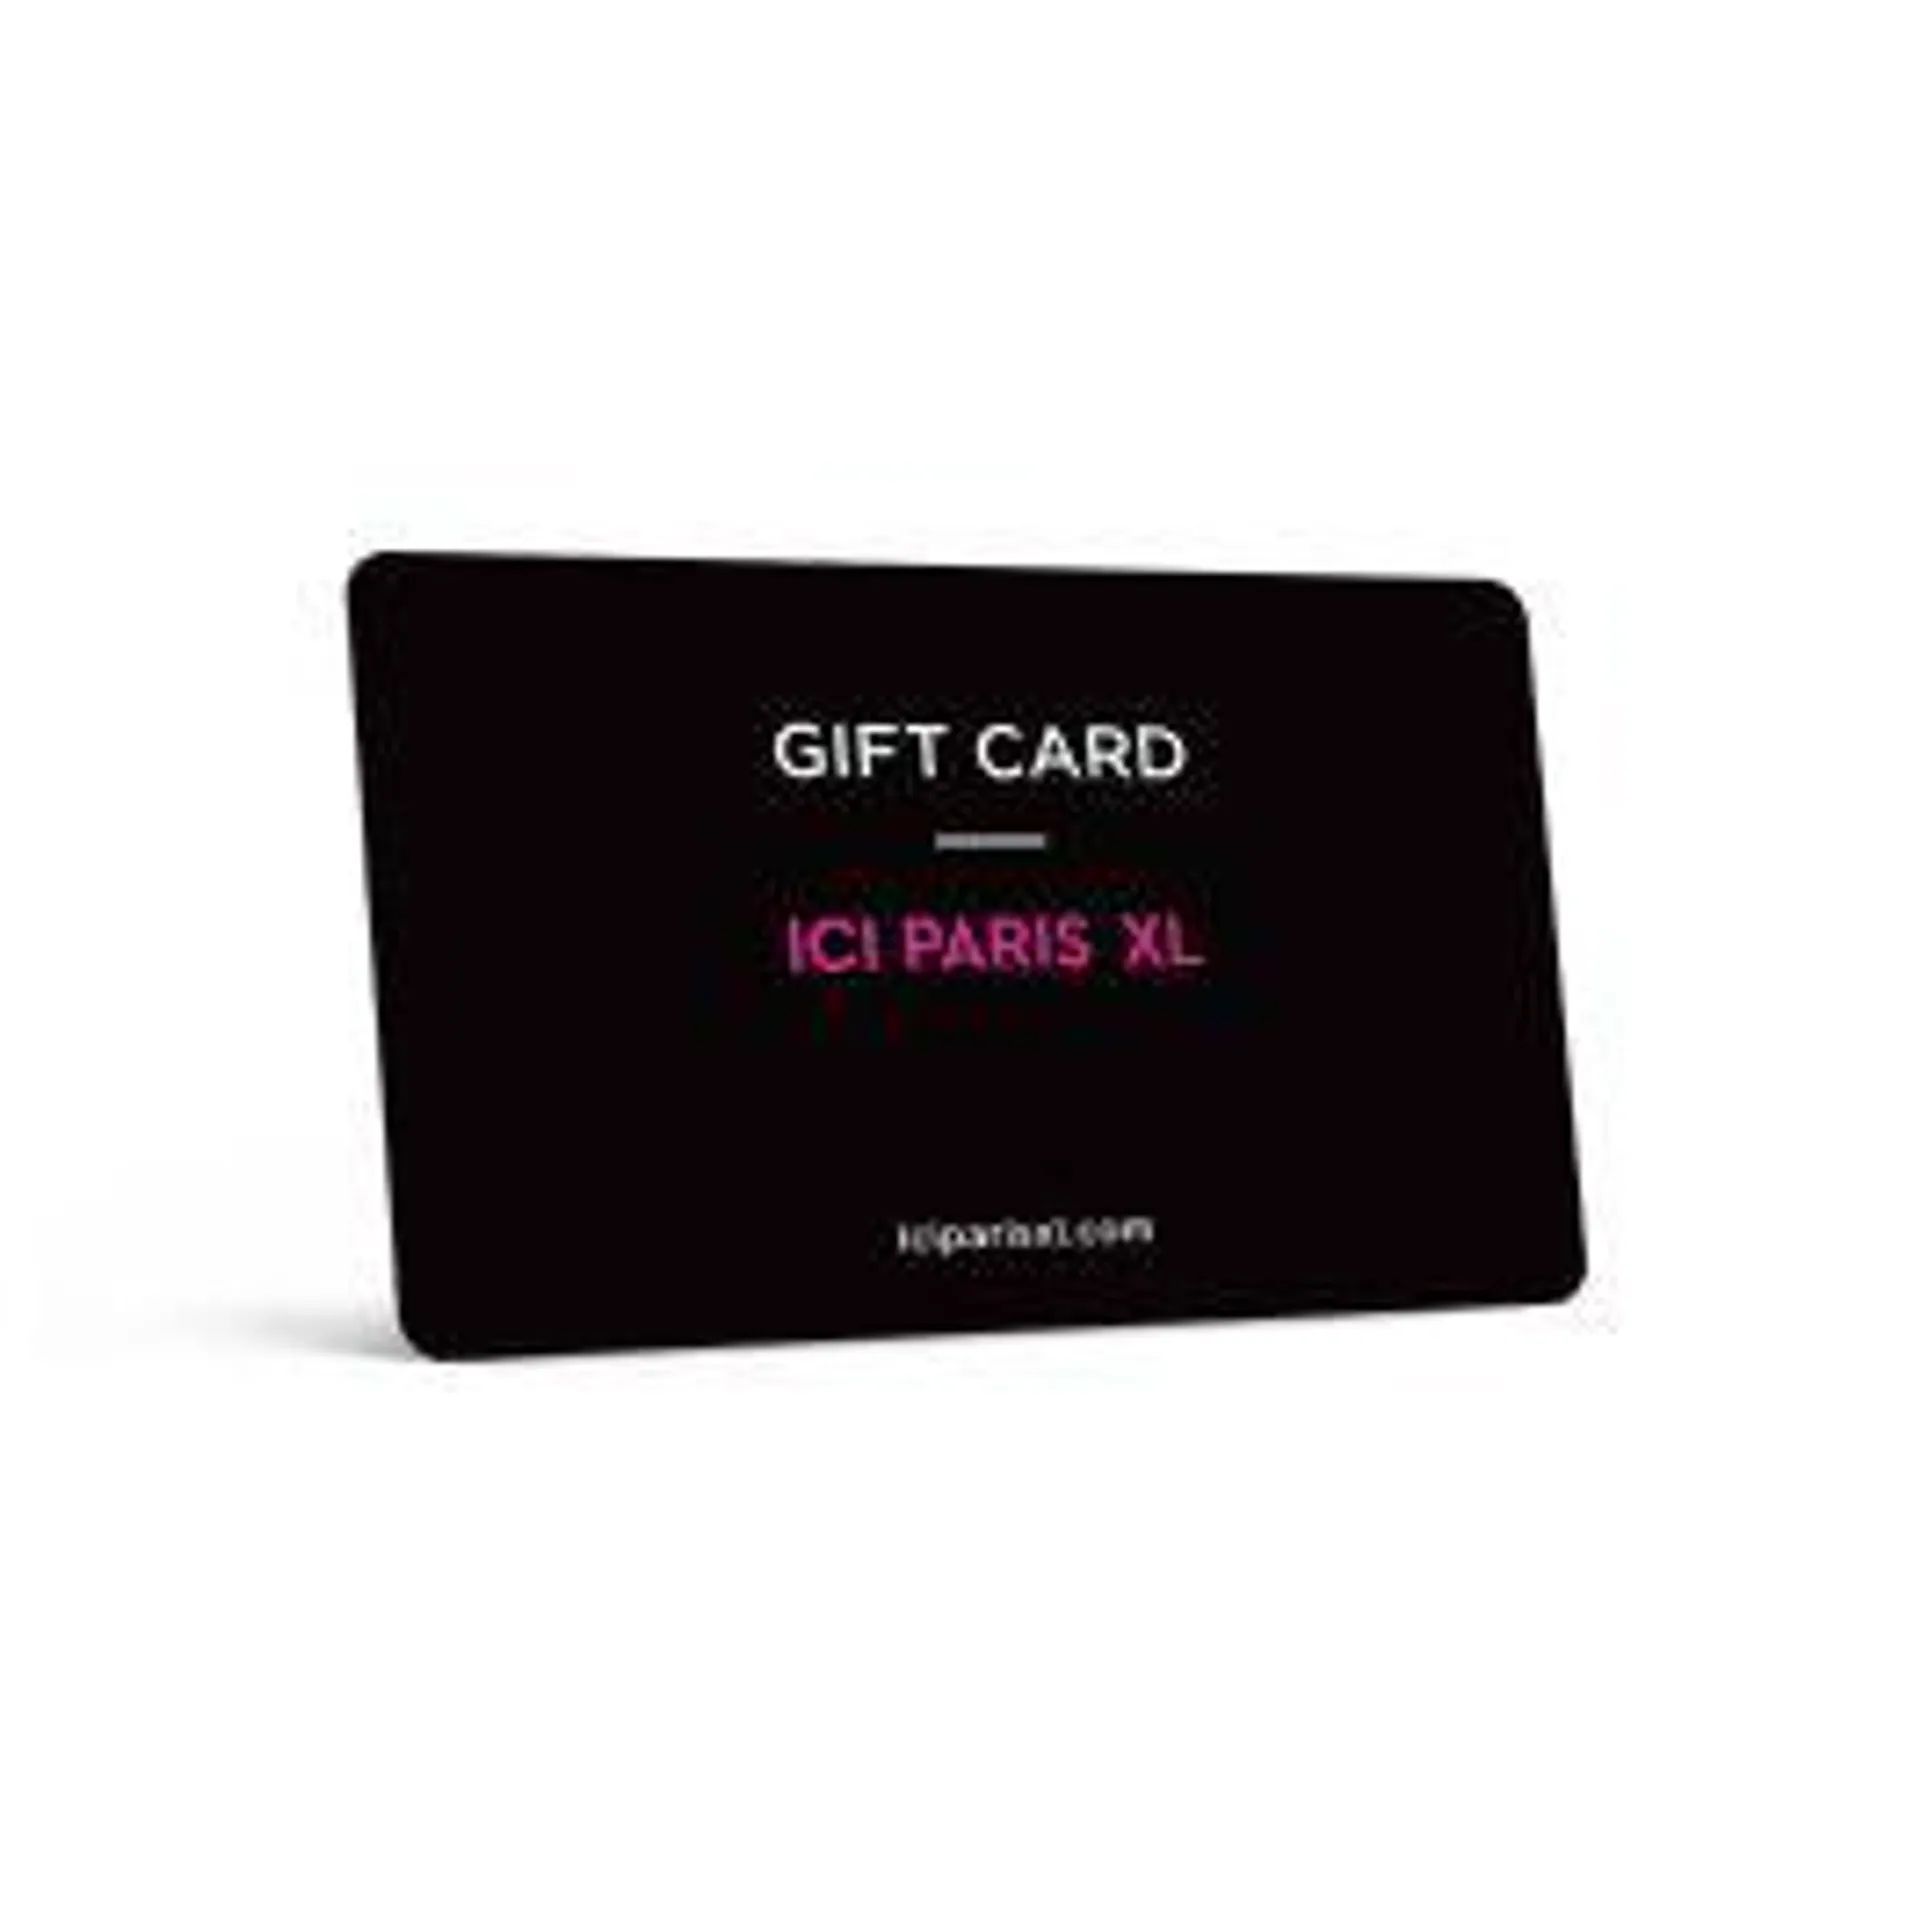 ICI PARIS XL Cadeaukaart